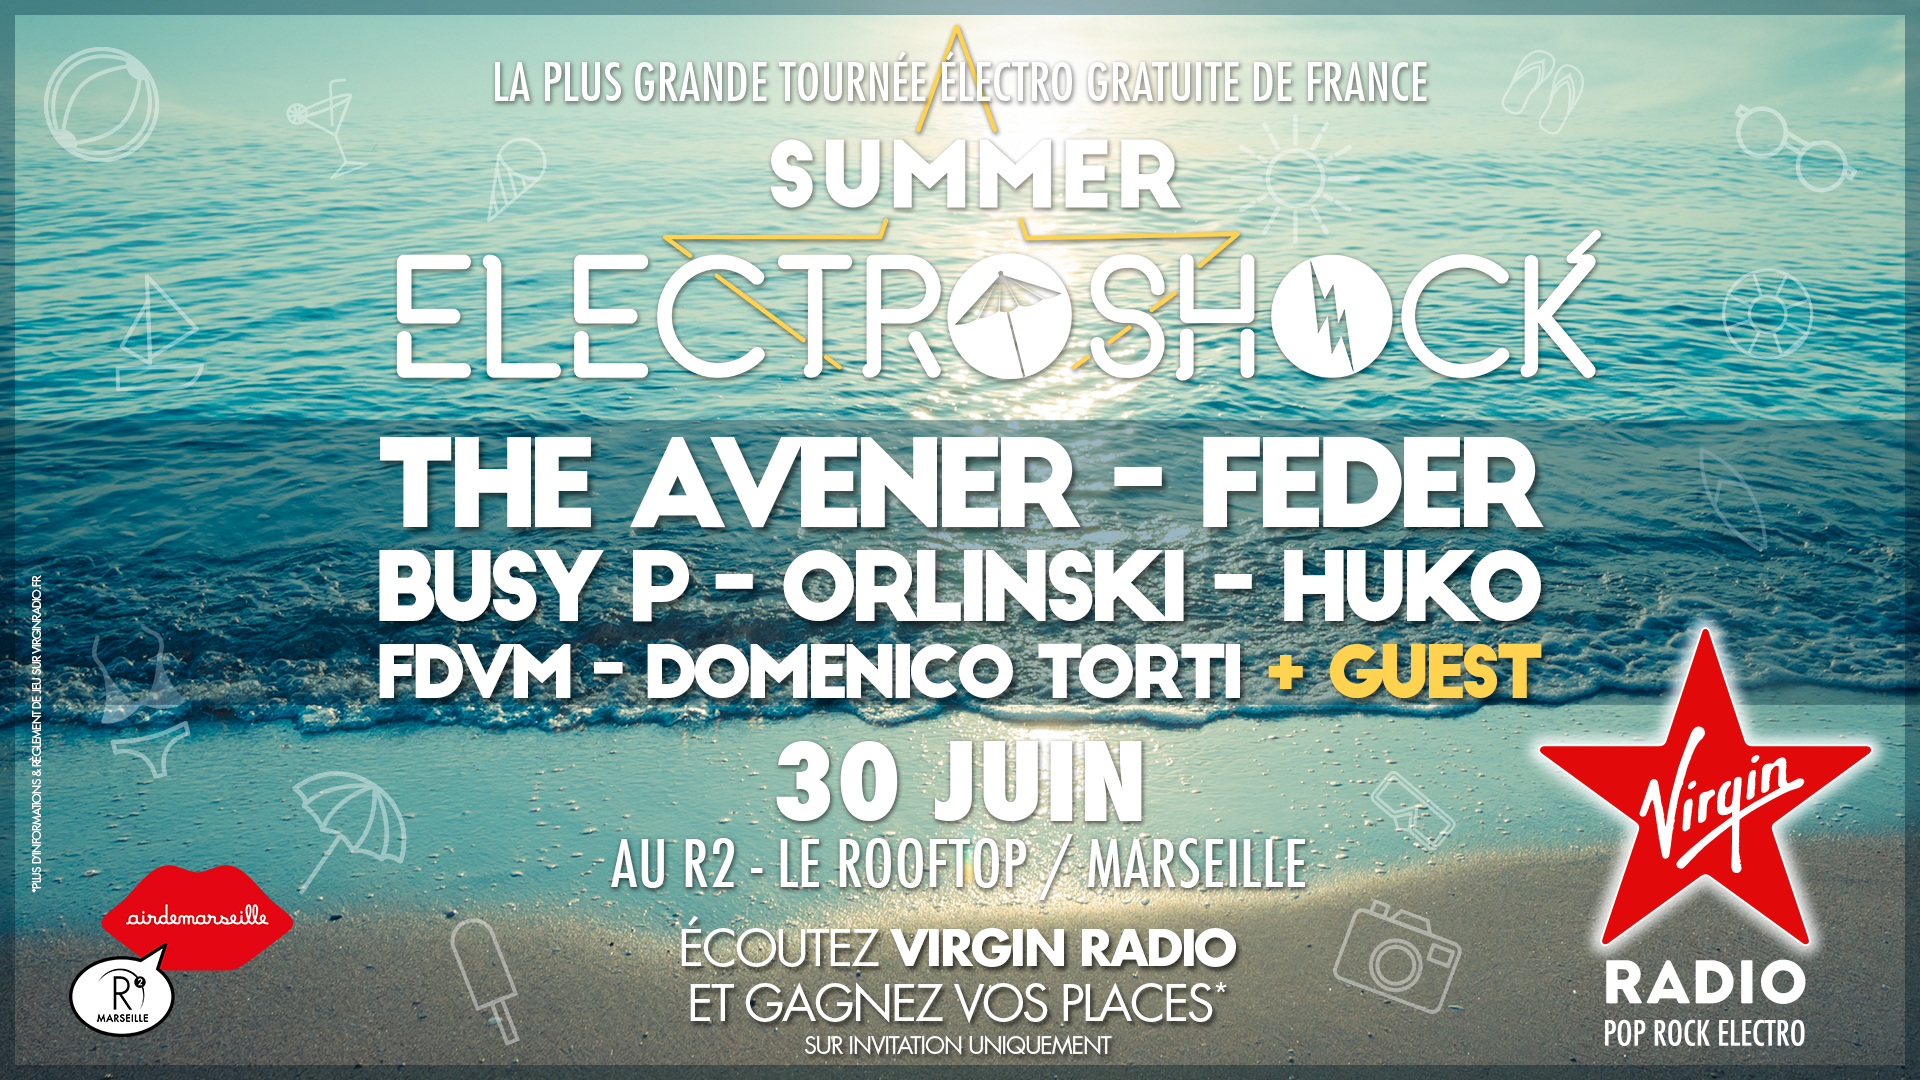 Marseille accueille le prochain ElectroSock de Virgin Radio